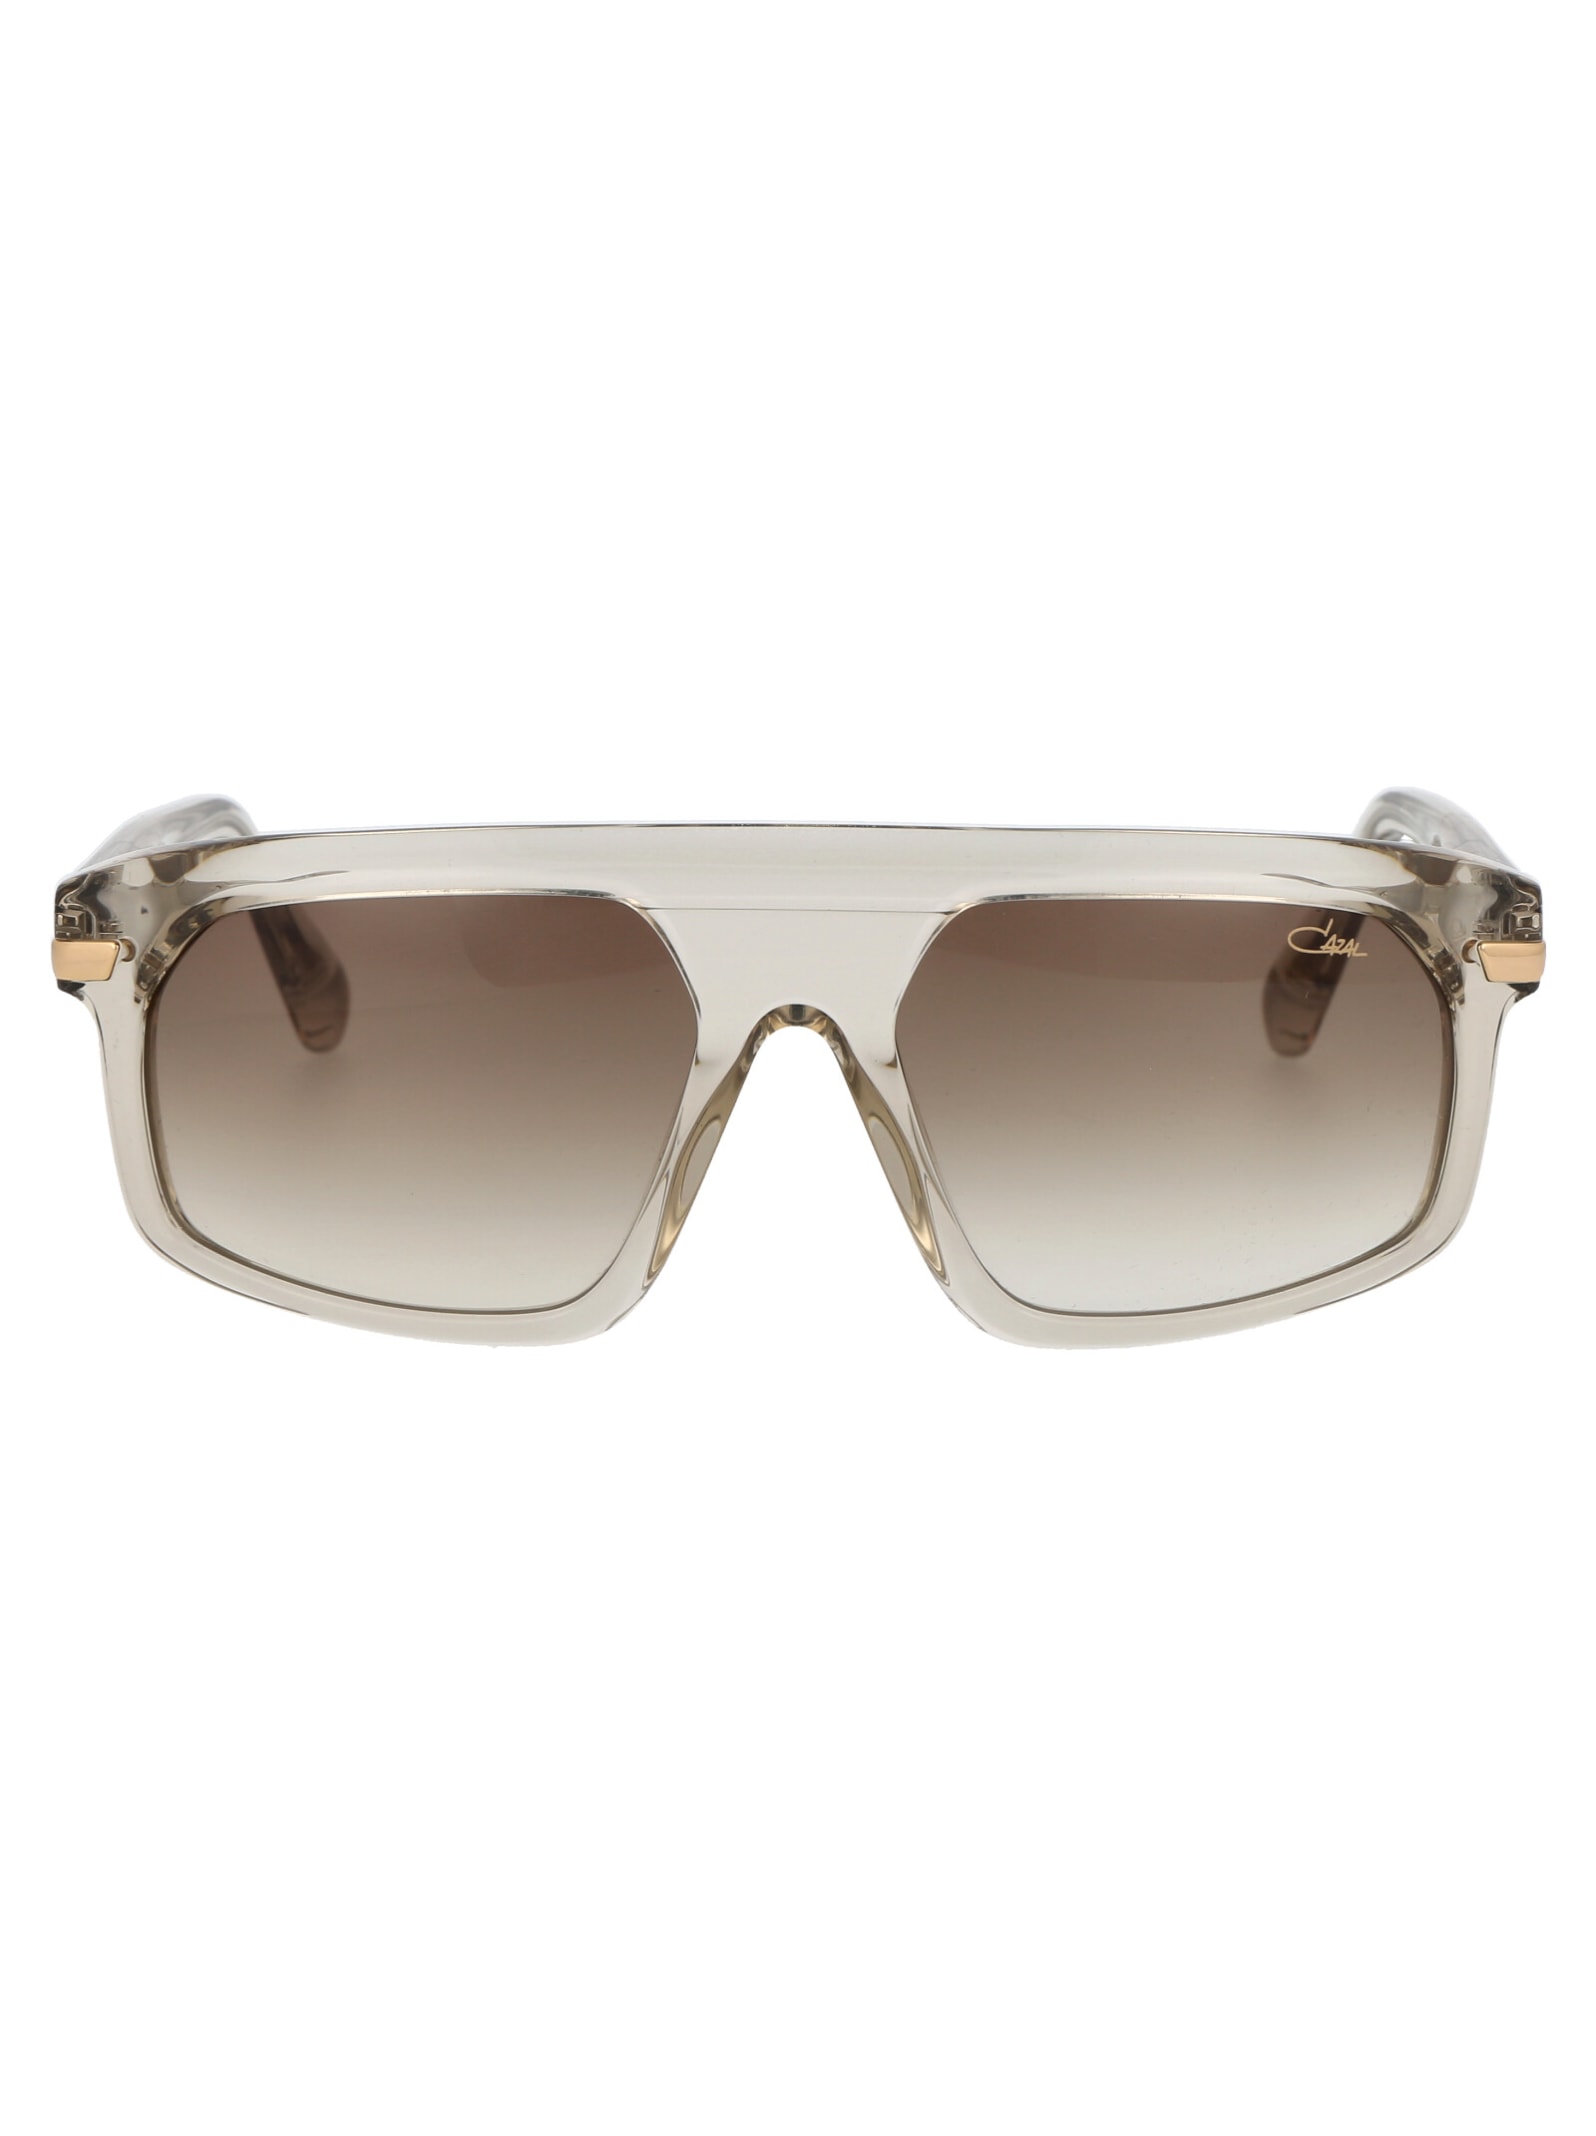 Cazal Mod.8504 Sunglasses